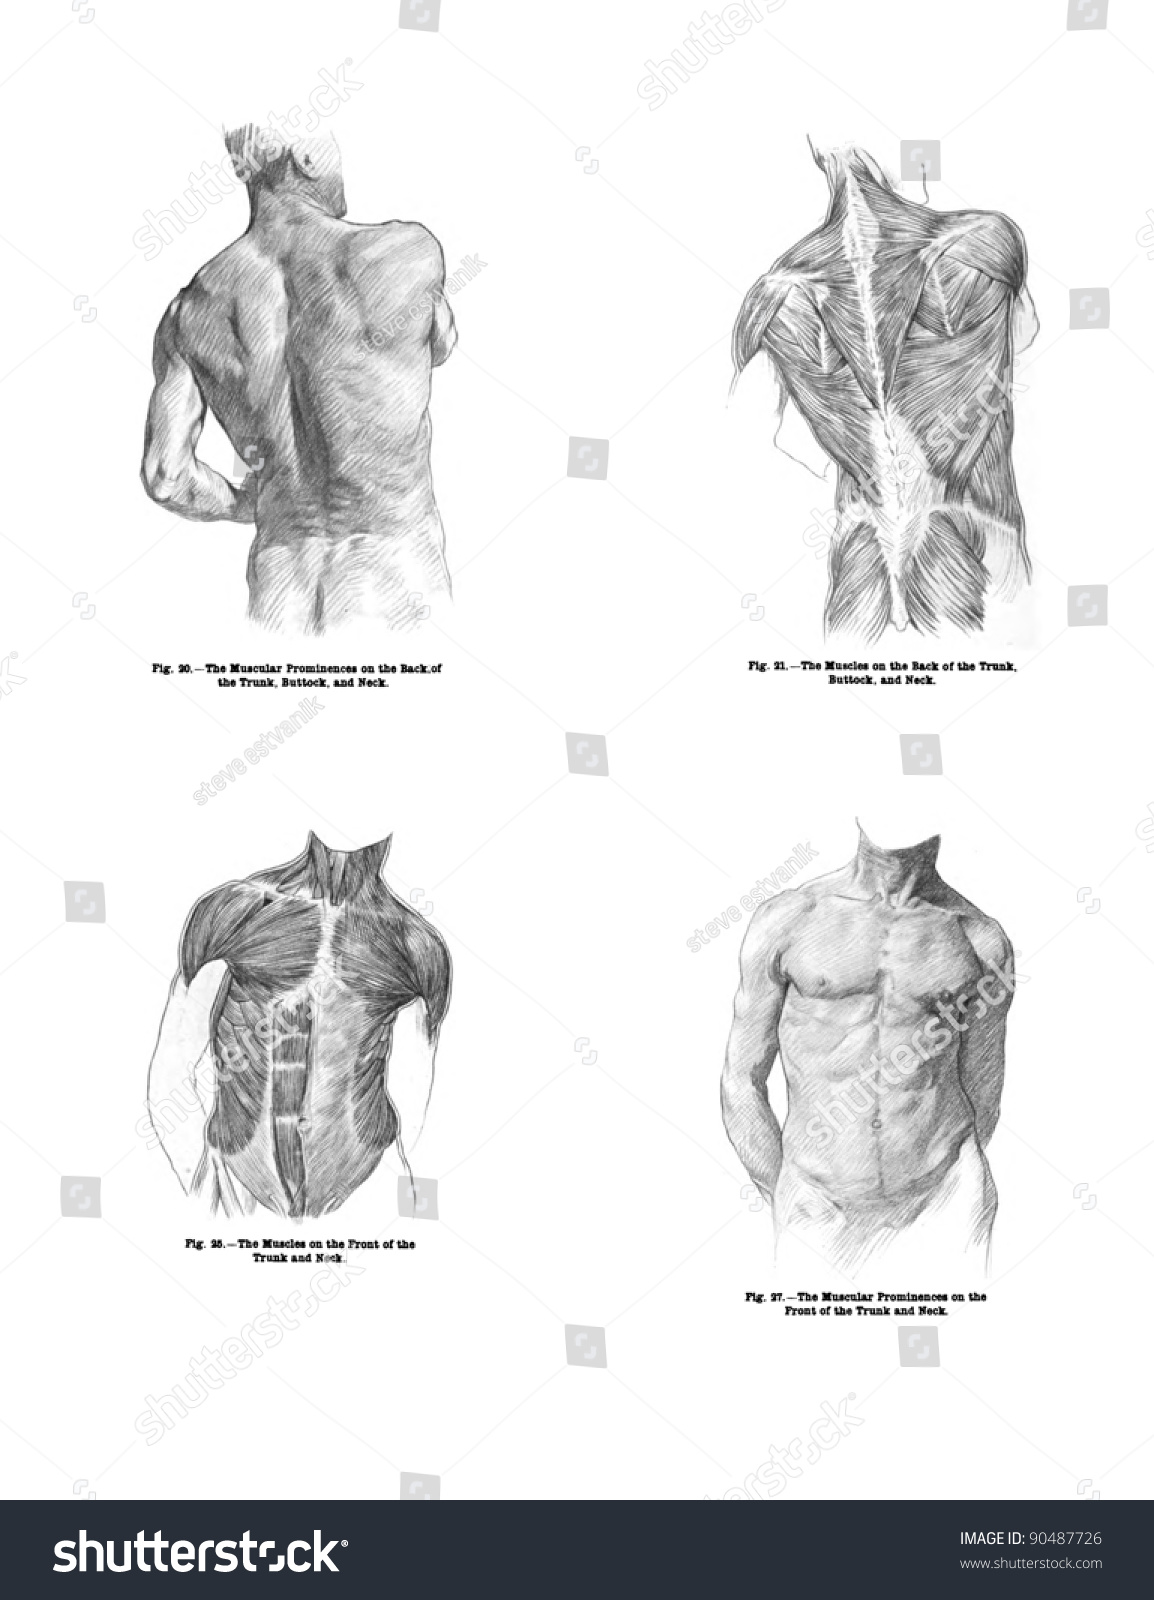 4 Views Human Back Muscles Torso Stock Photo Edit Now 90487726